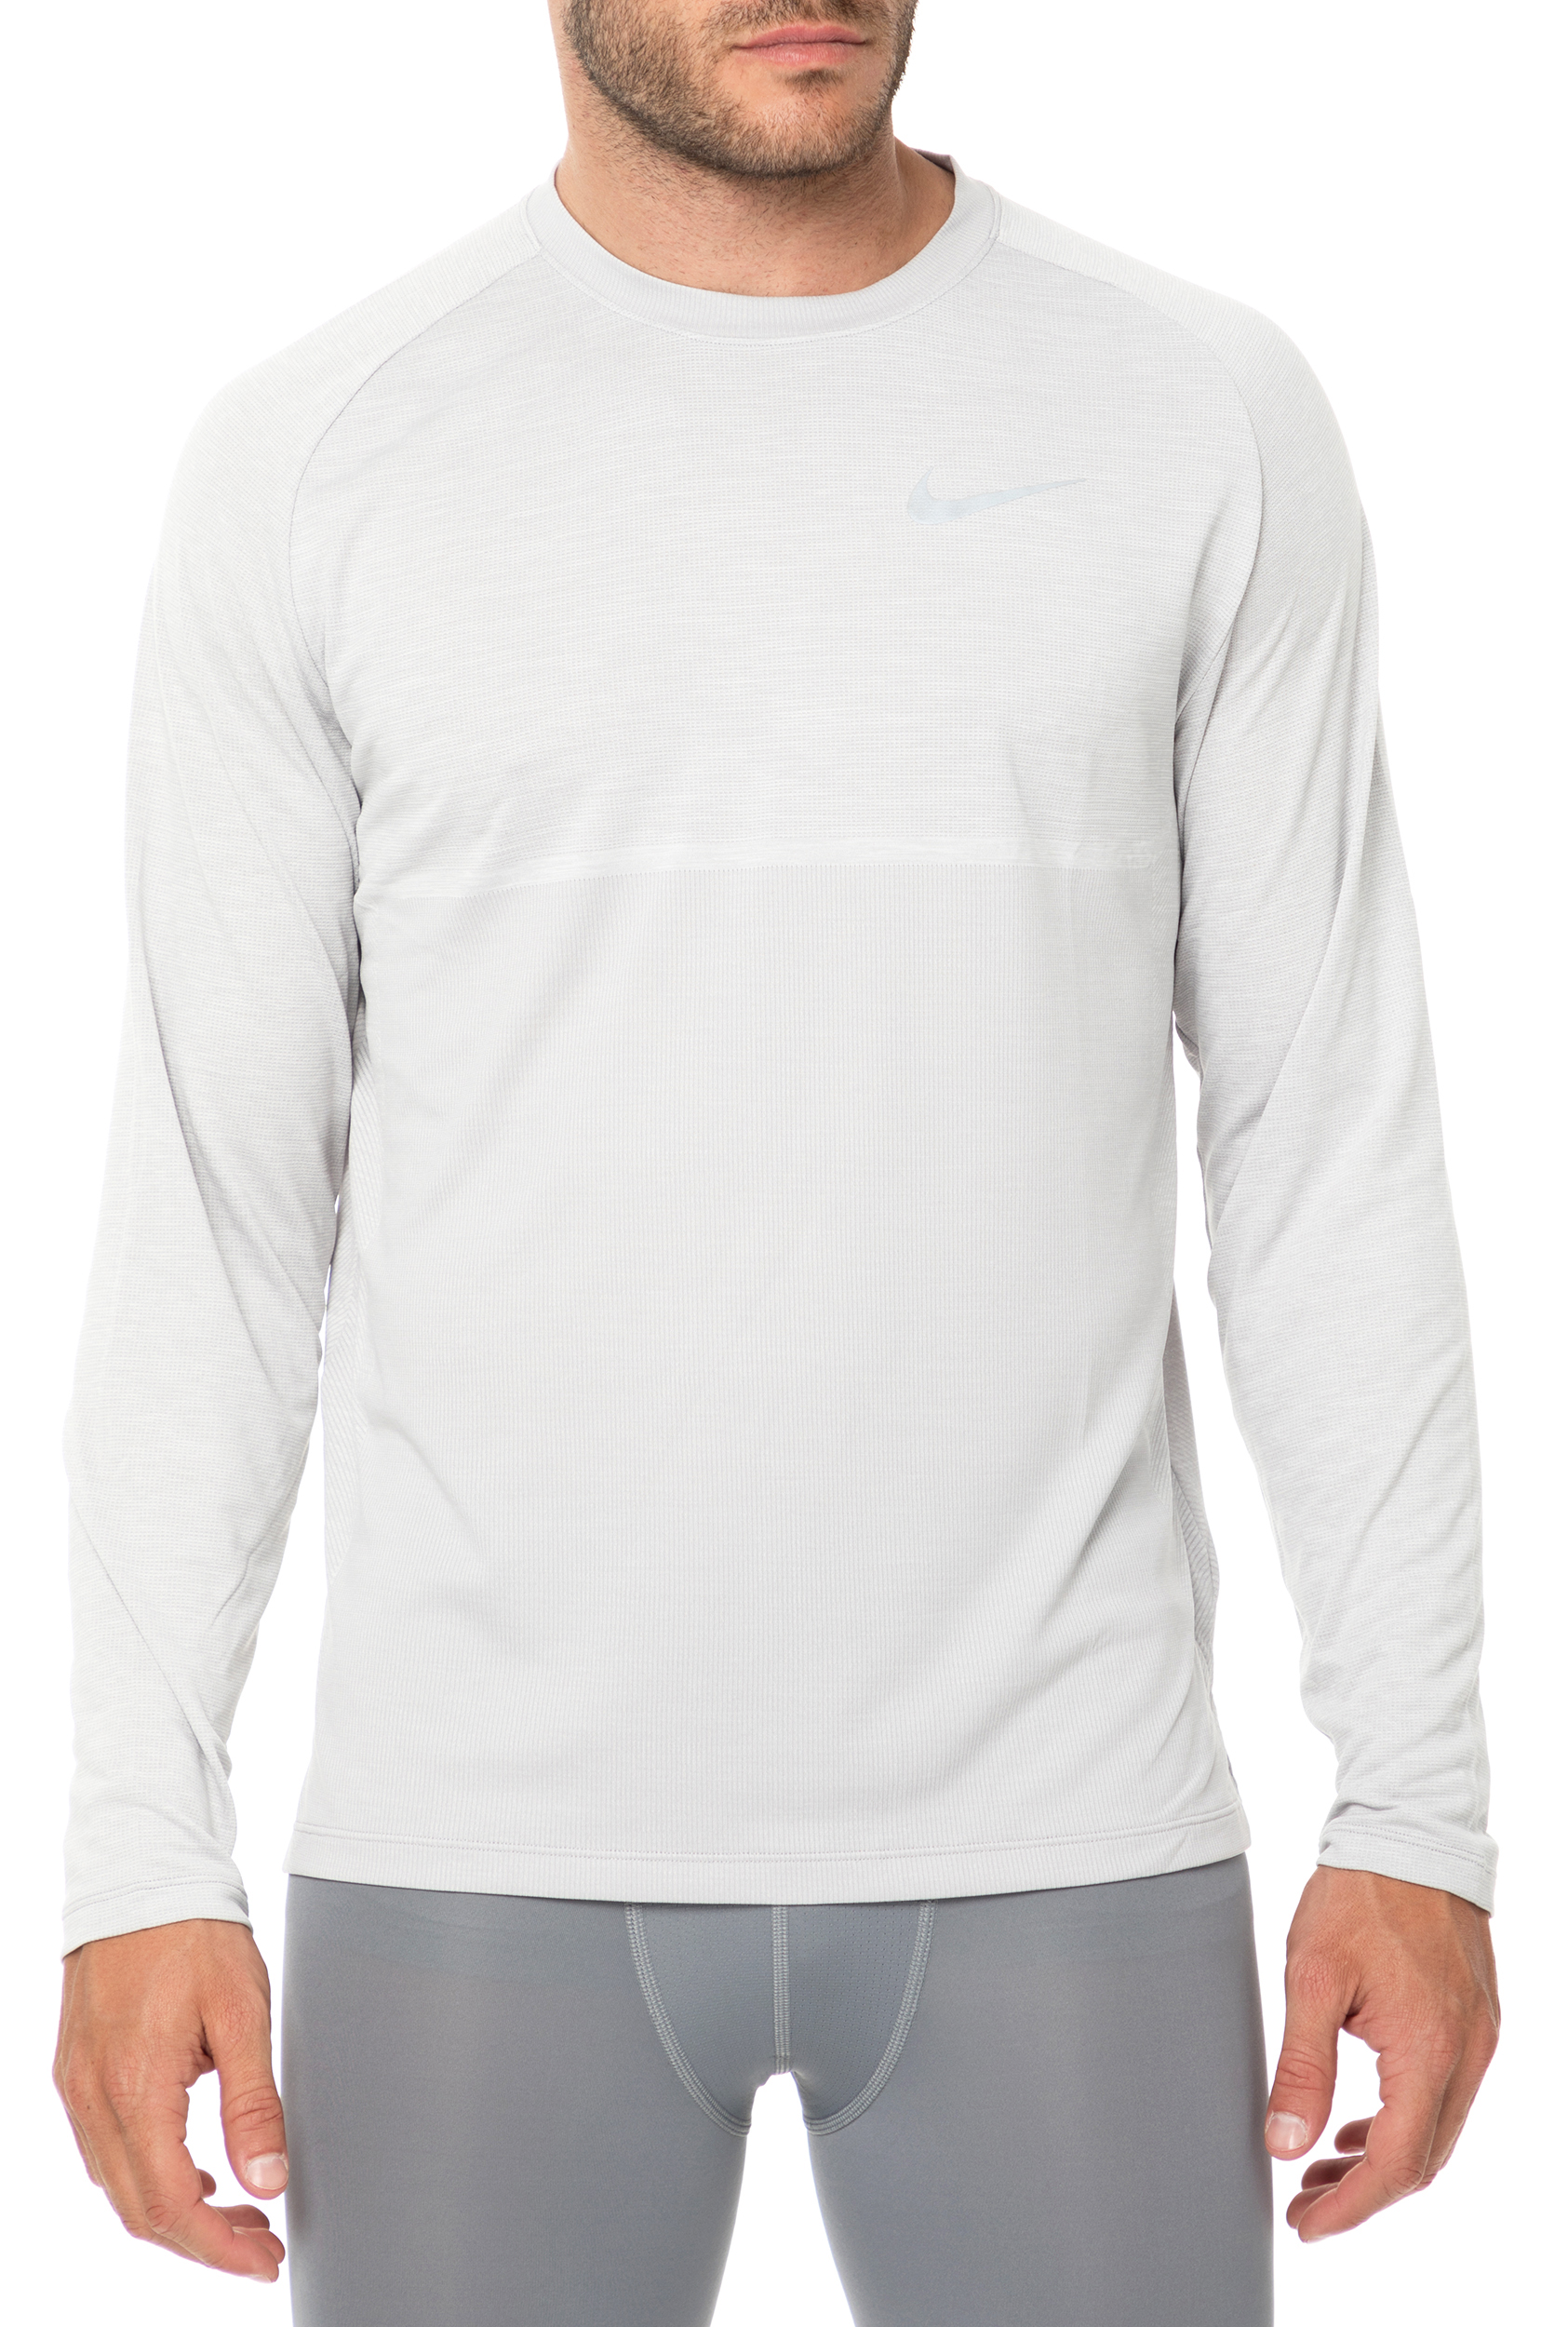 NIKE Ανδρική μακρυμάνικη μπλούζα Nike DRY MEDALIST λευκή